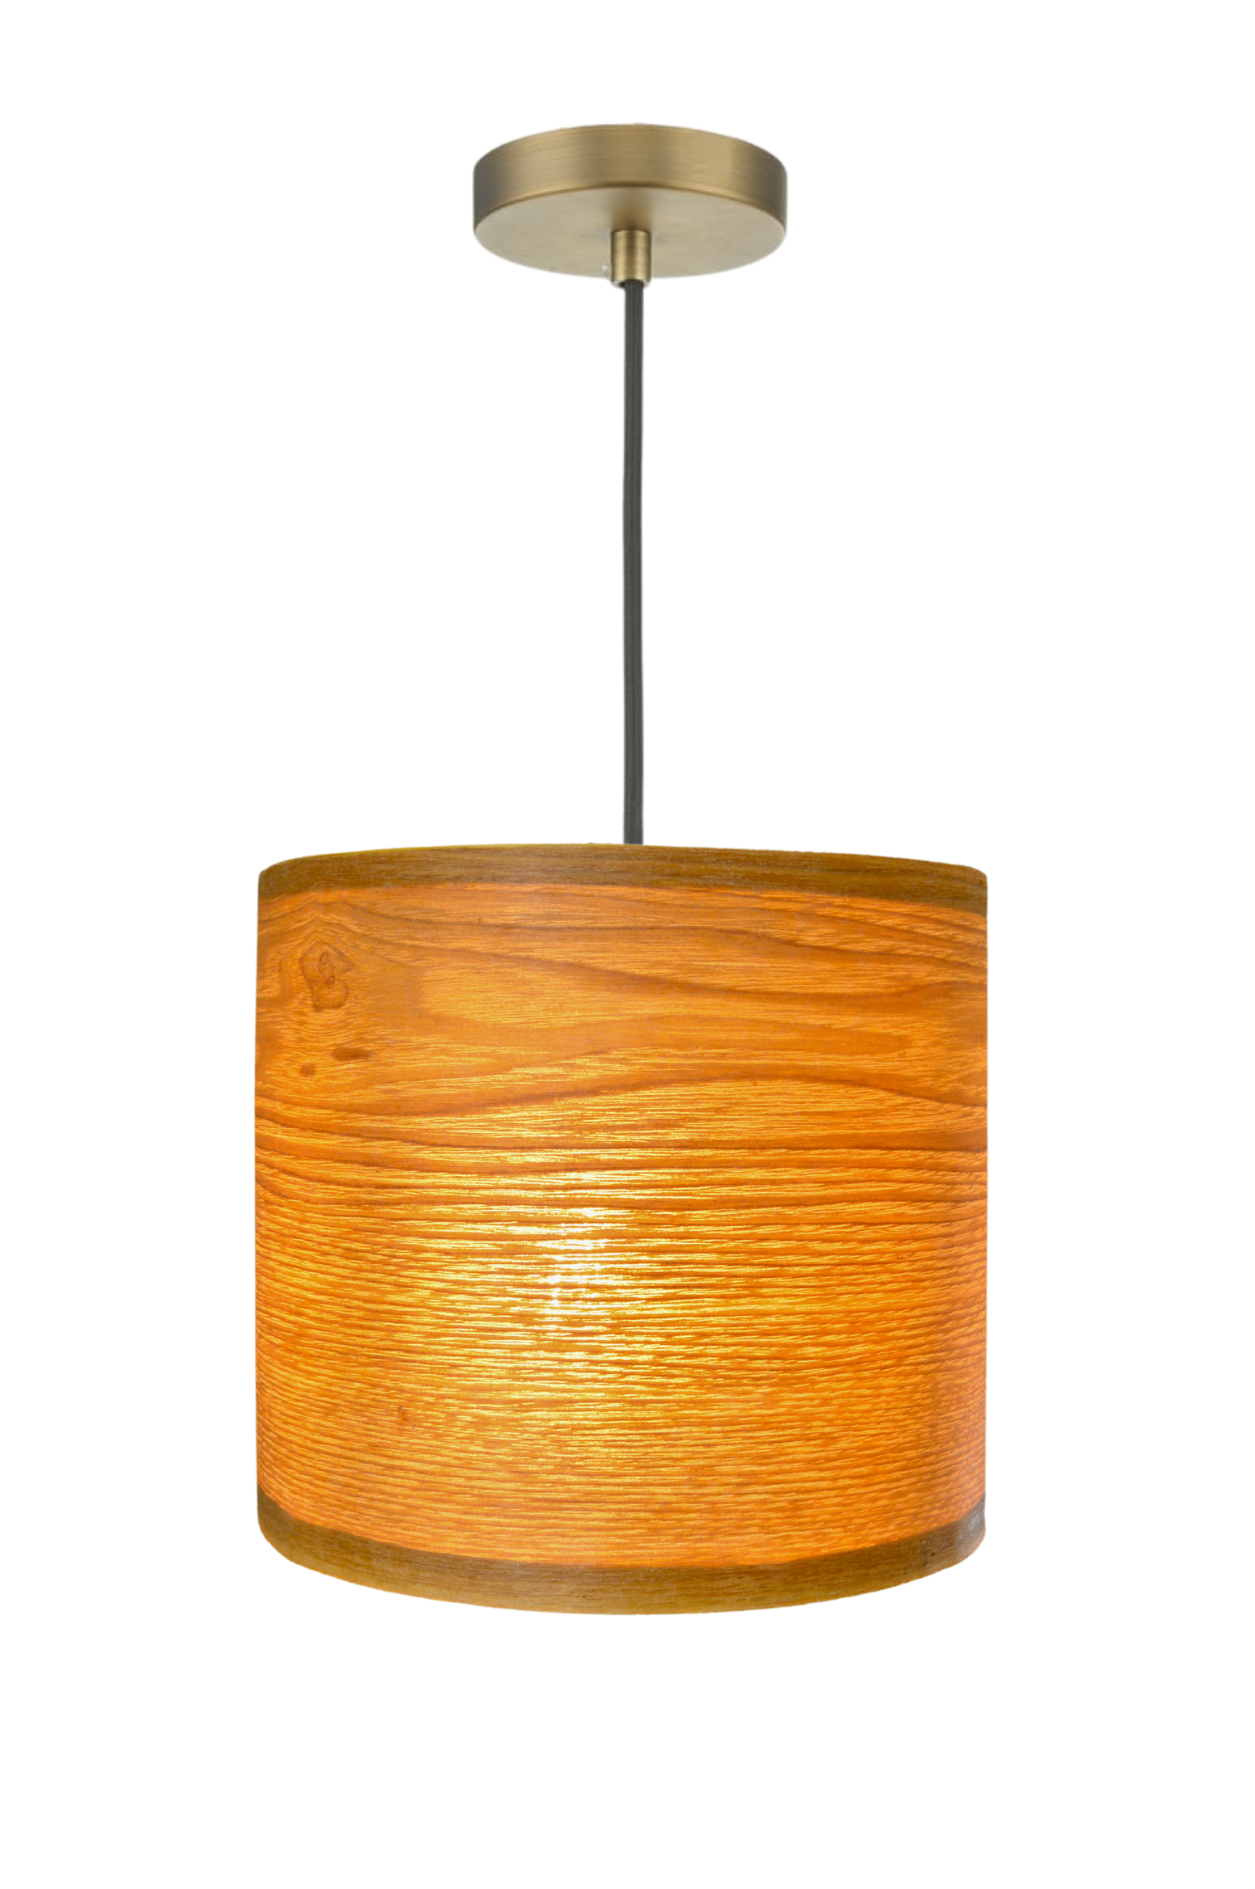 20cm Ash Oak Wood veneer ceiling pendant light shade